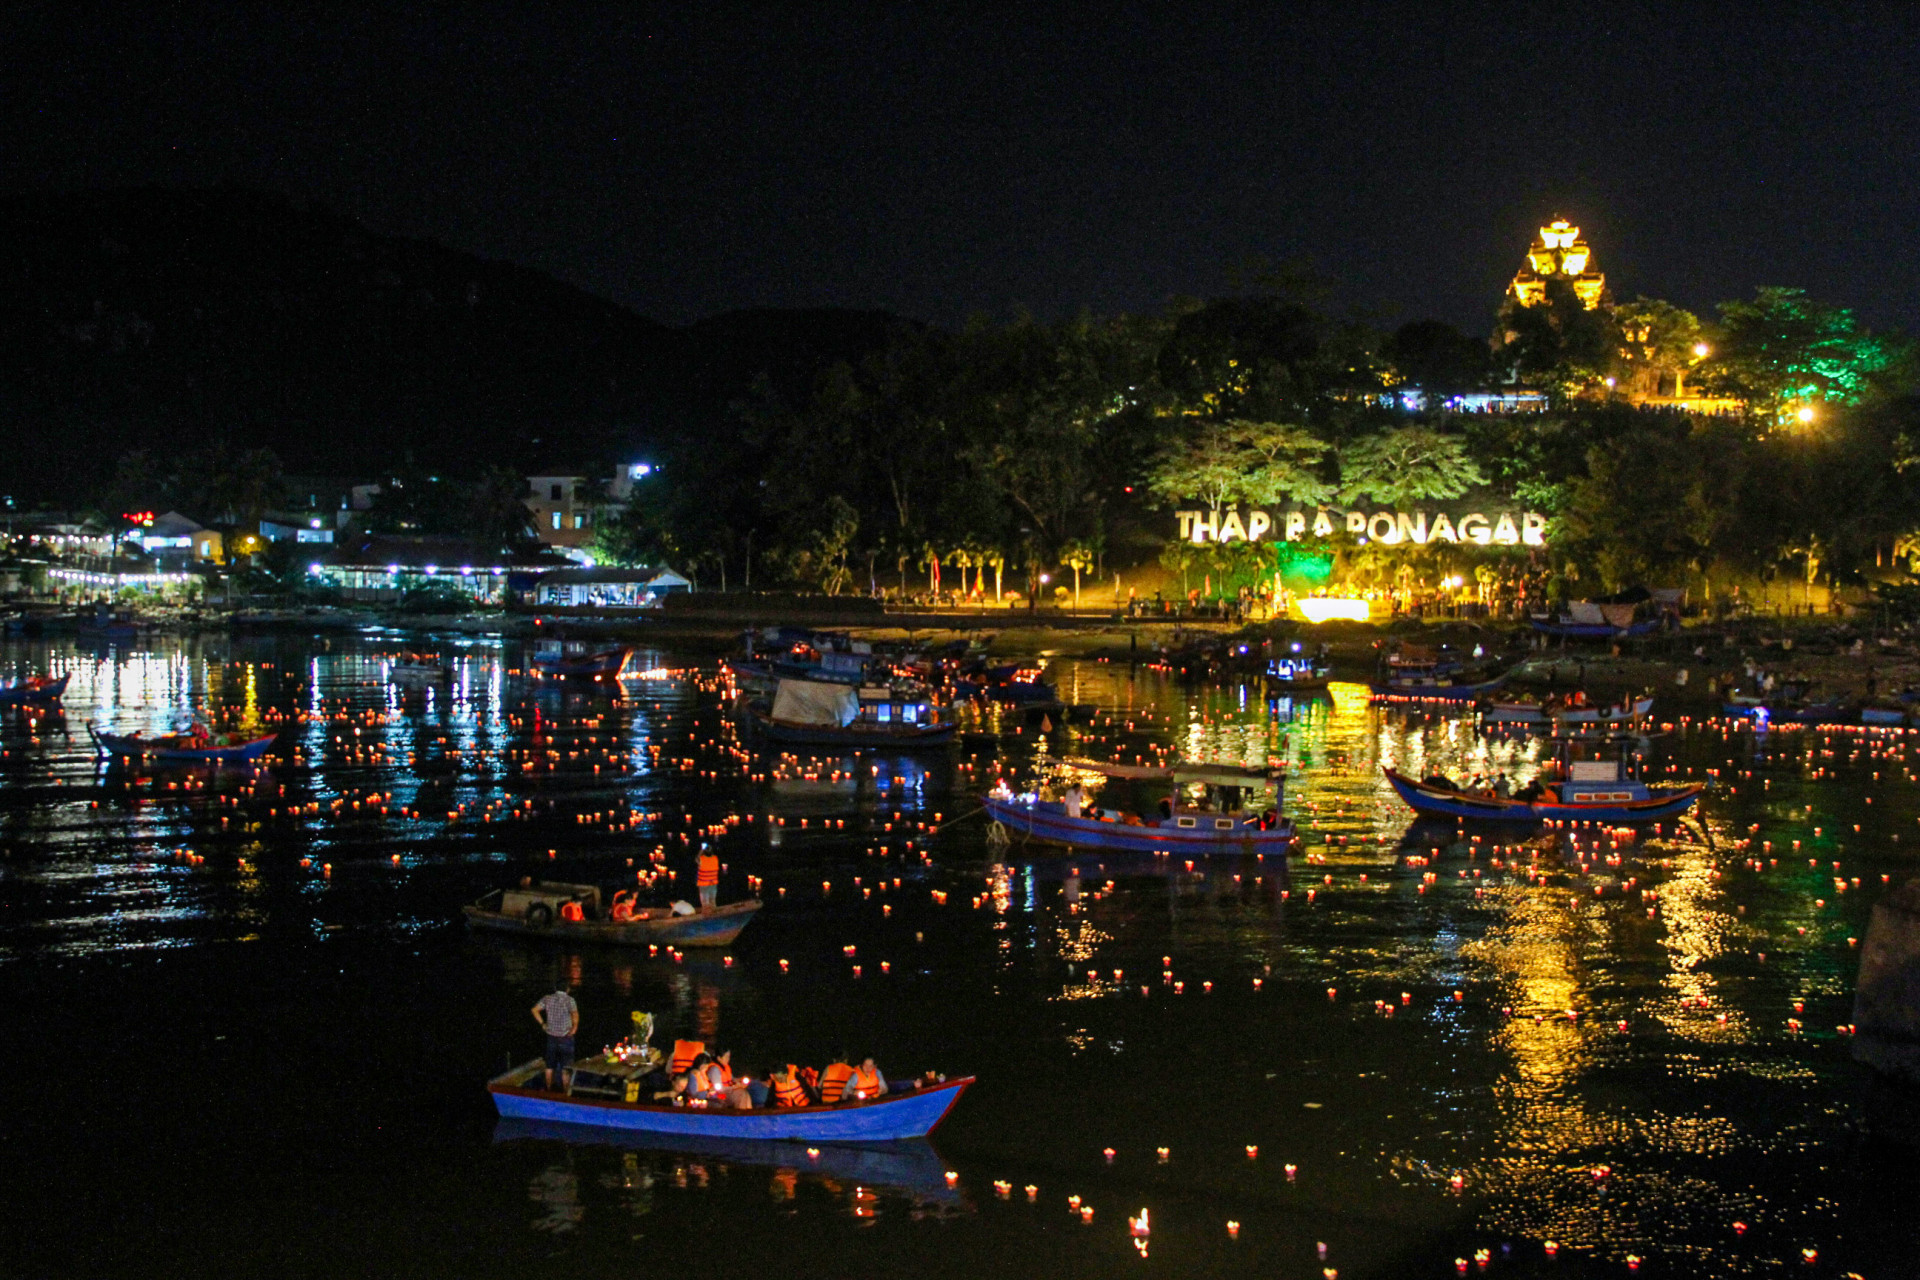 People floating lanterns on Cai River during Ponagar Temple Festival

